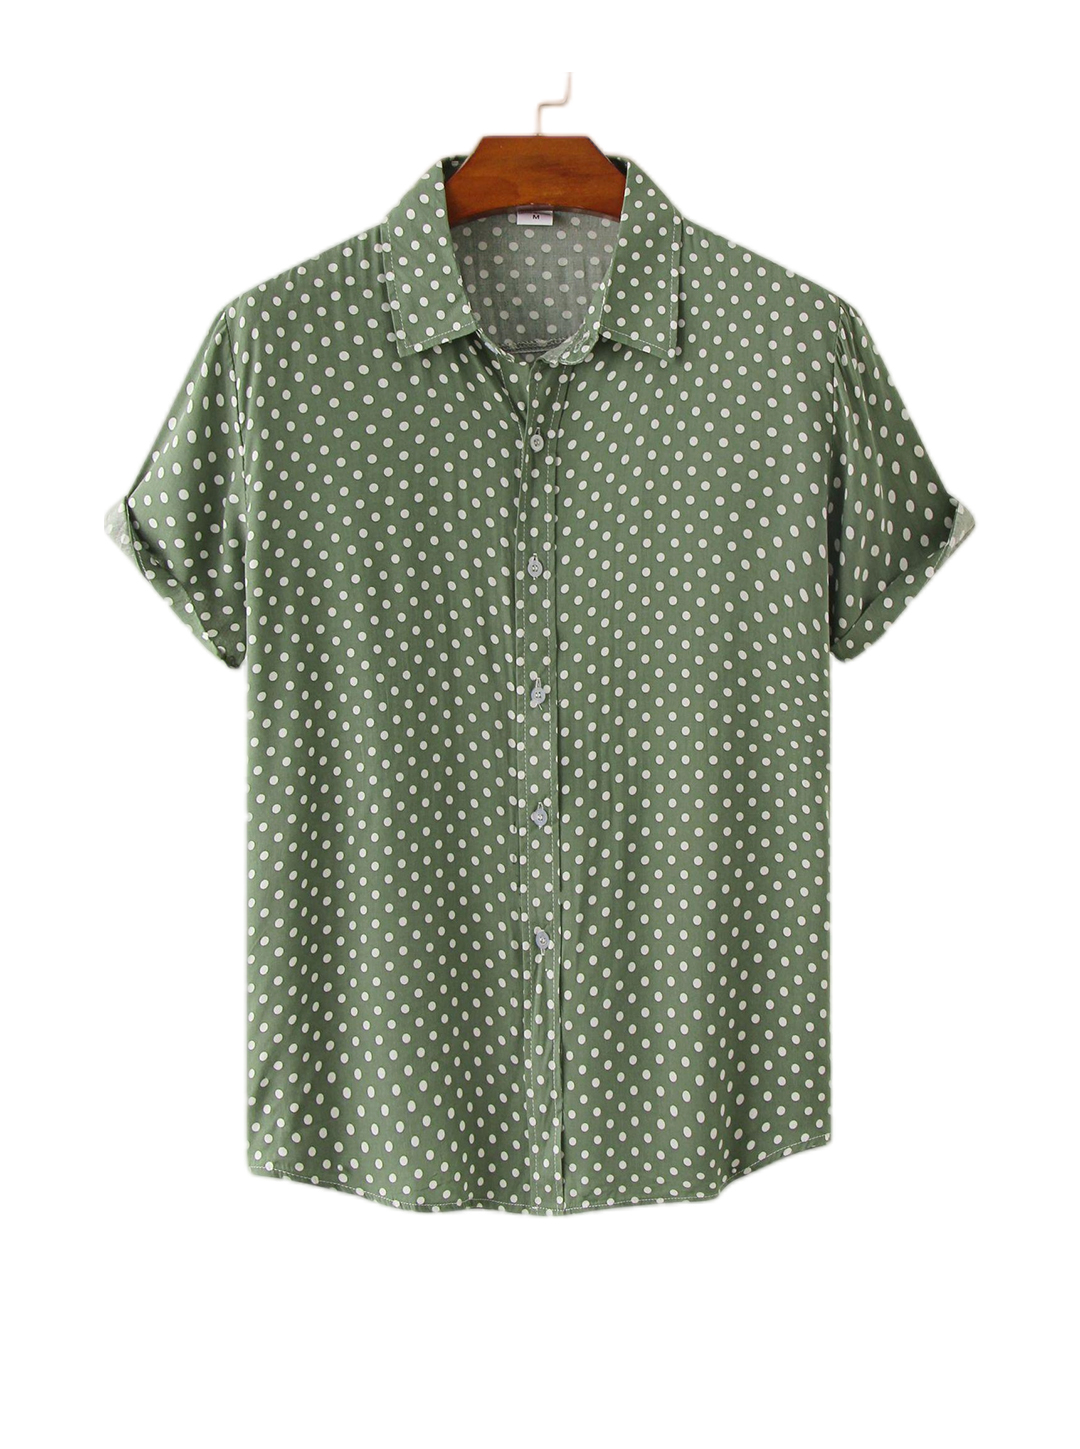 Poisonstreetwear Men's Polka Dot Retro Printed Short-sleeved Shirt-poisonstreetwear.com